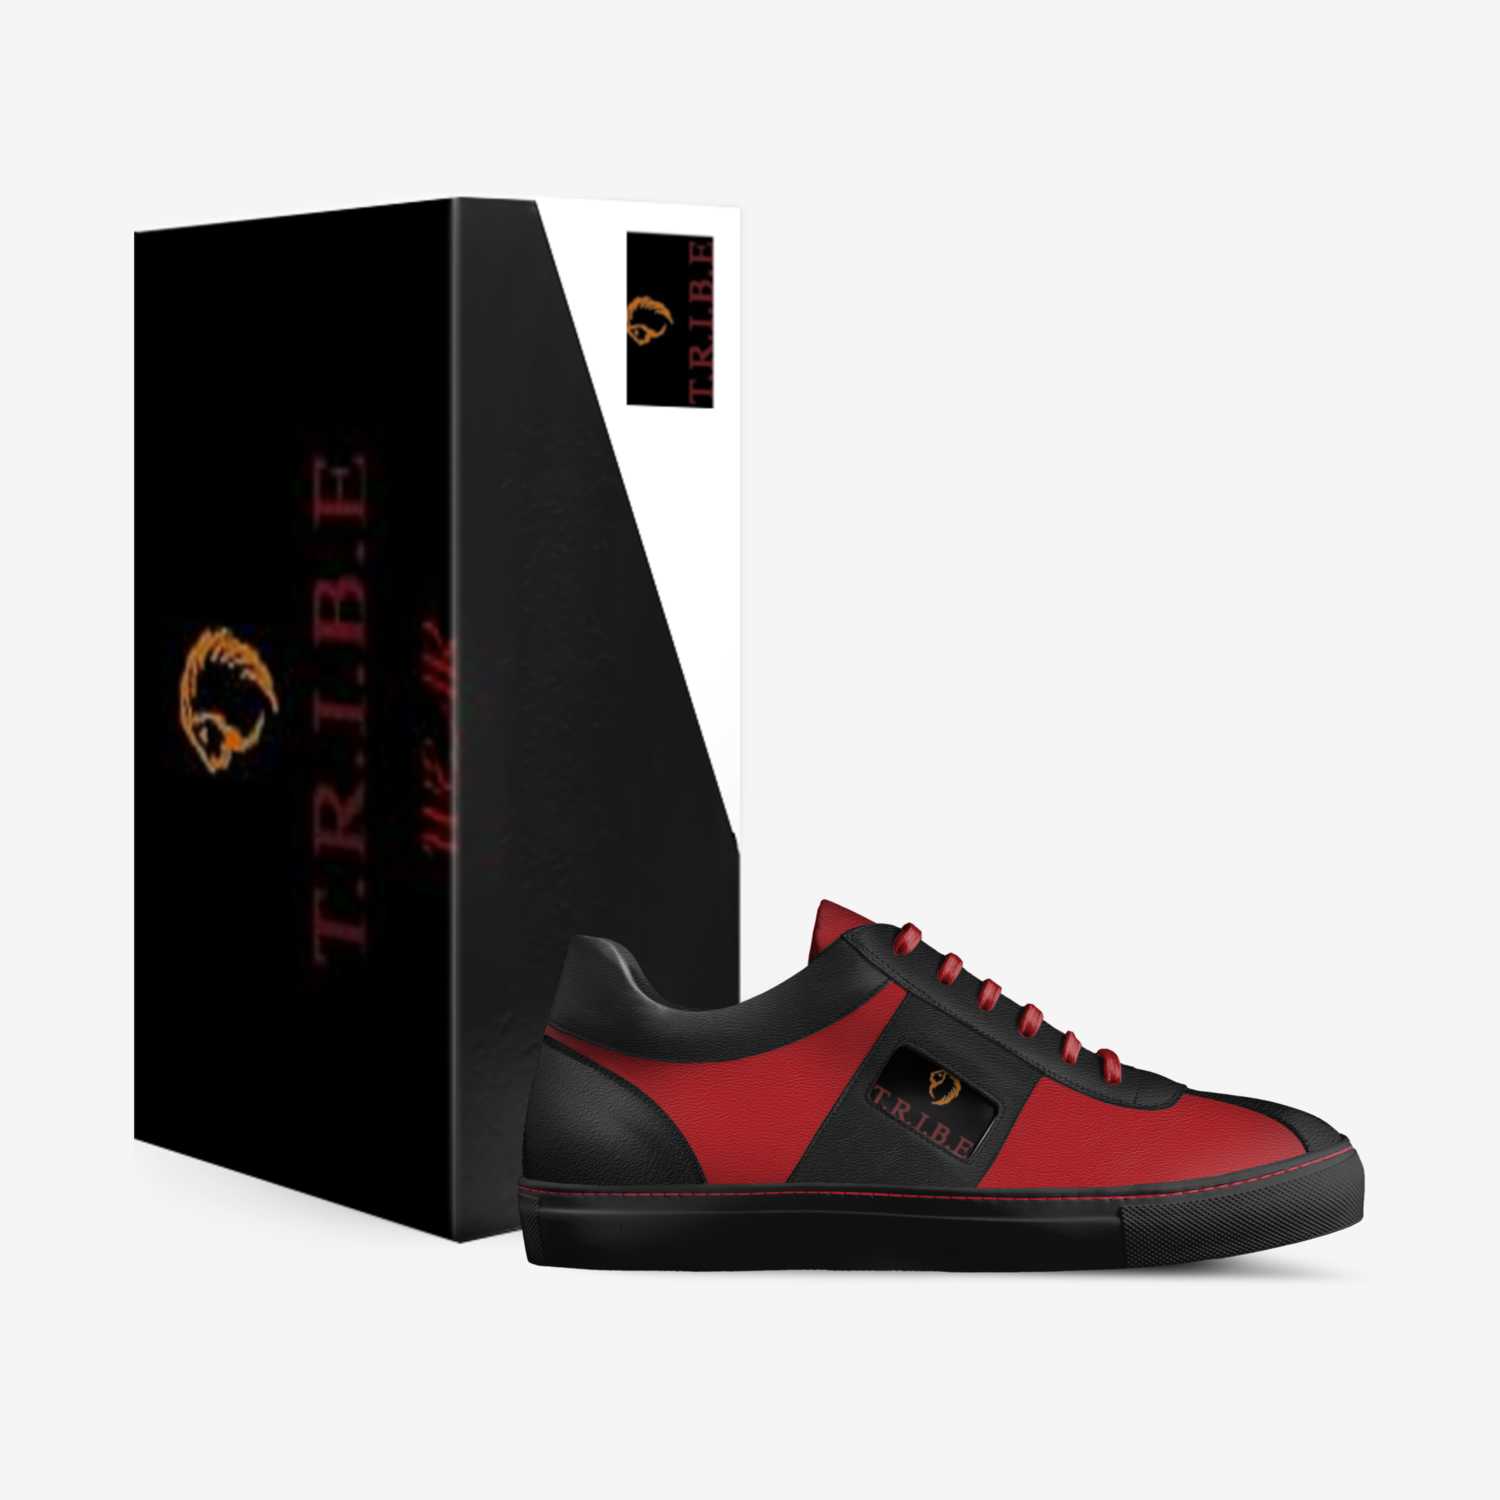 T.R.I.B.E custom made in Italy shoes by Tunisia Al-salahuddin | Box view